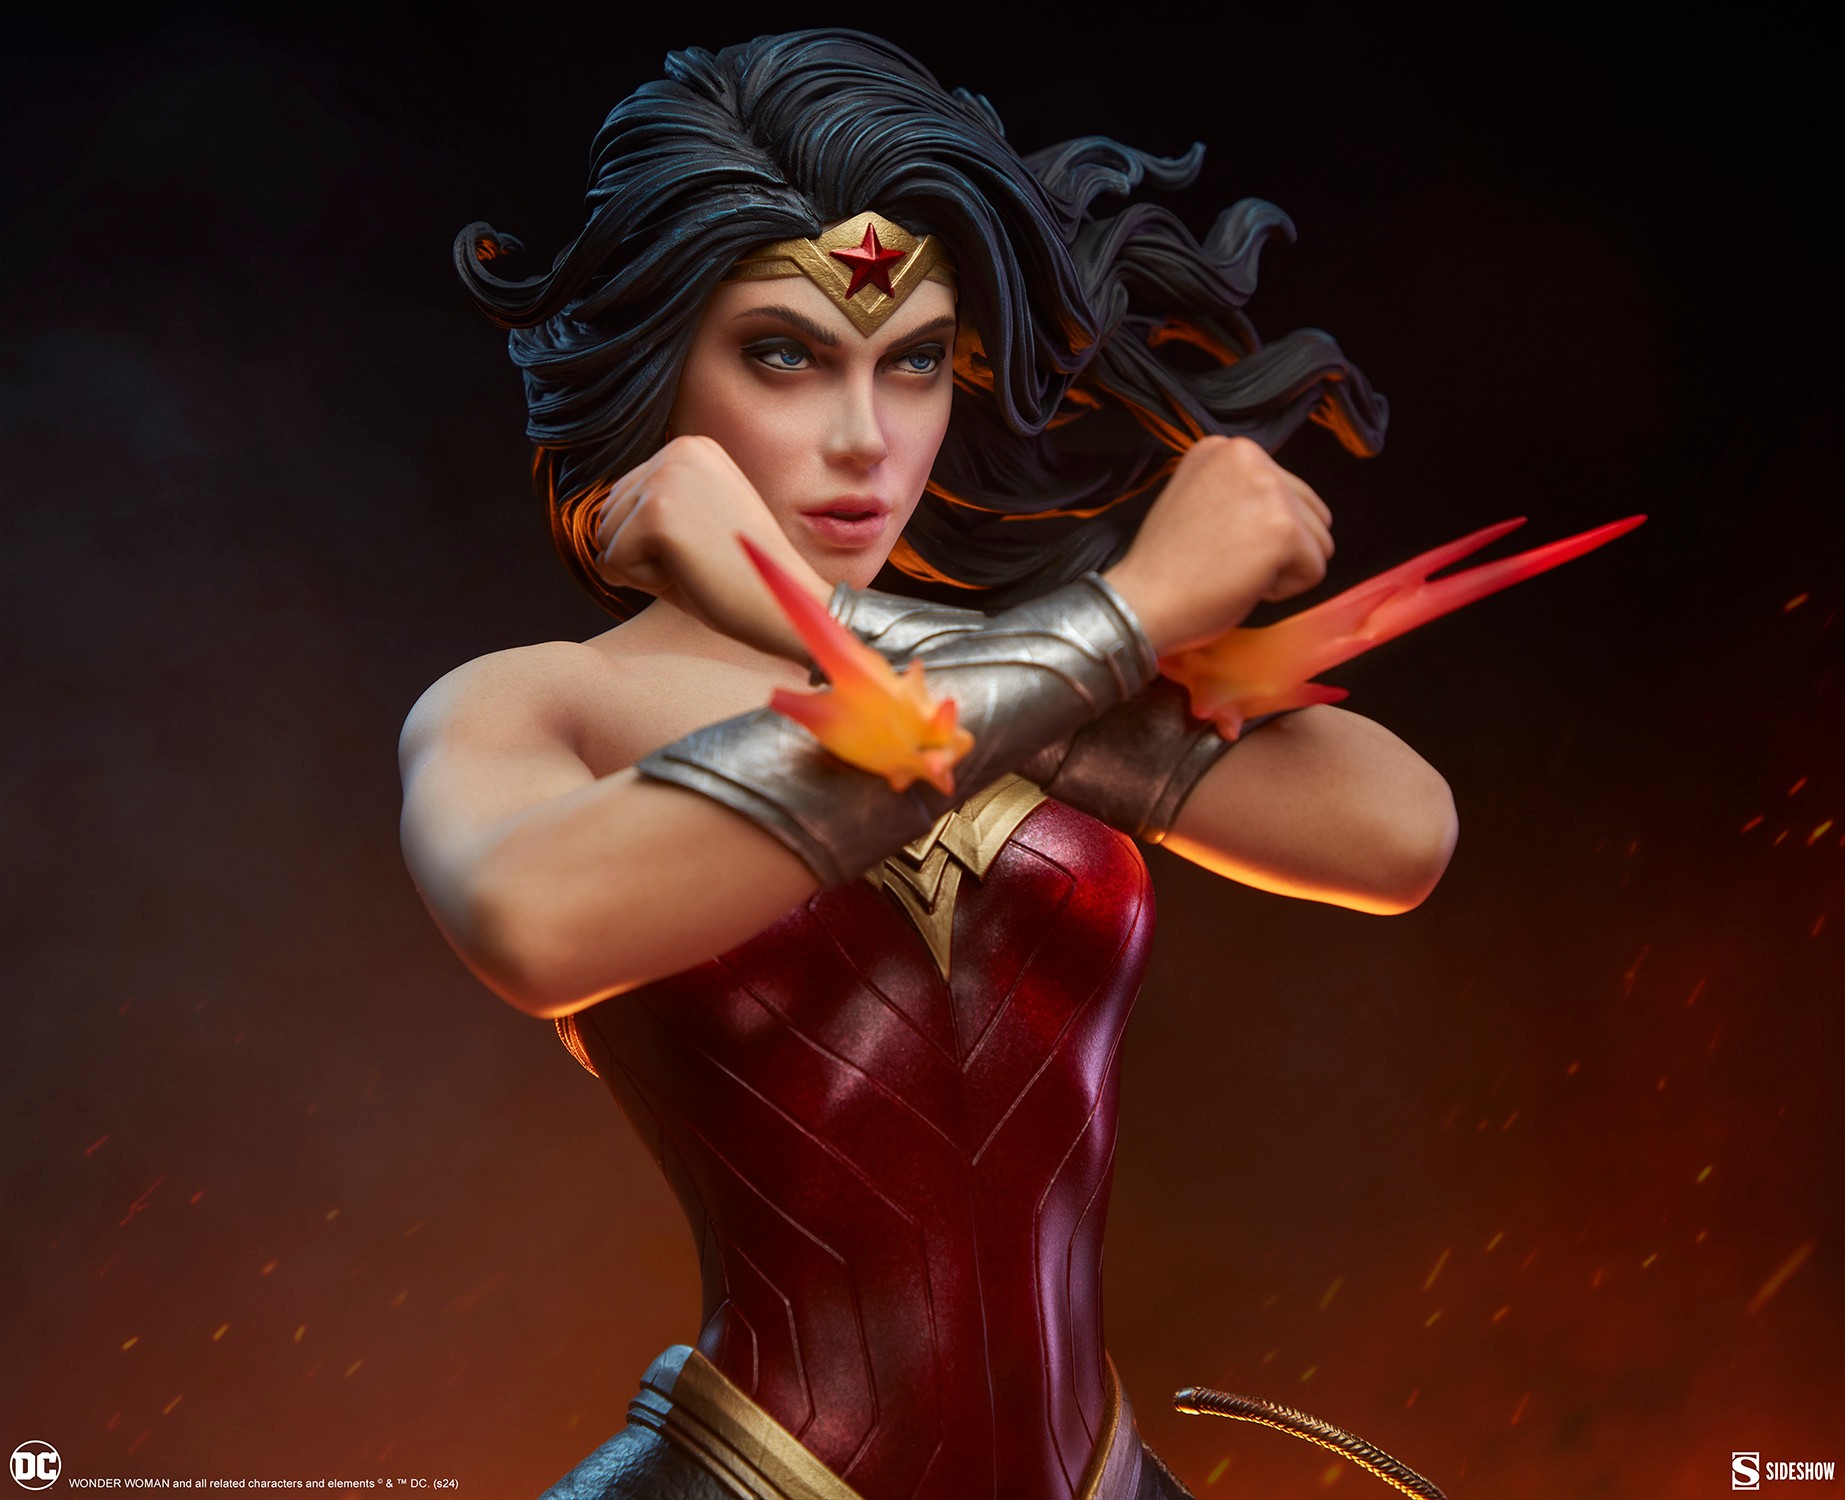 Wonder Woman: Saving the Day (Prototype Shown) View 3